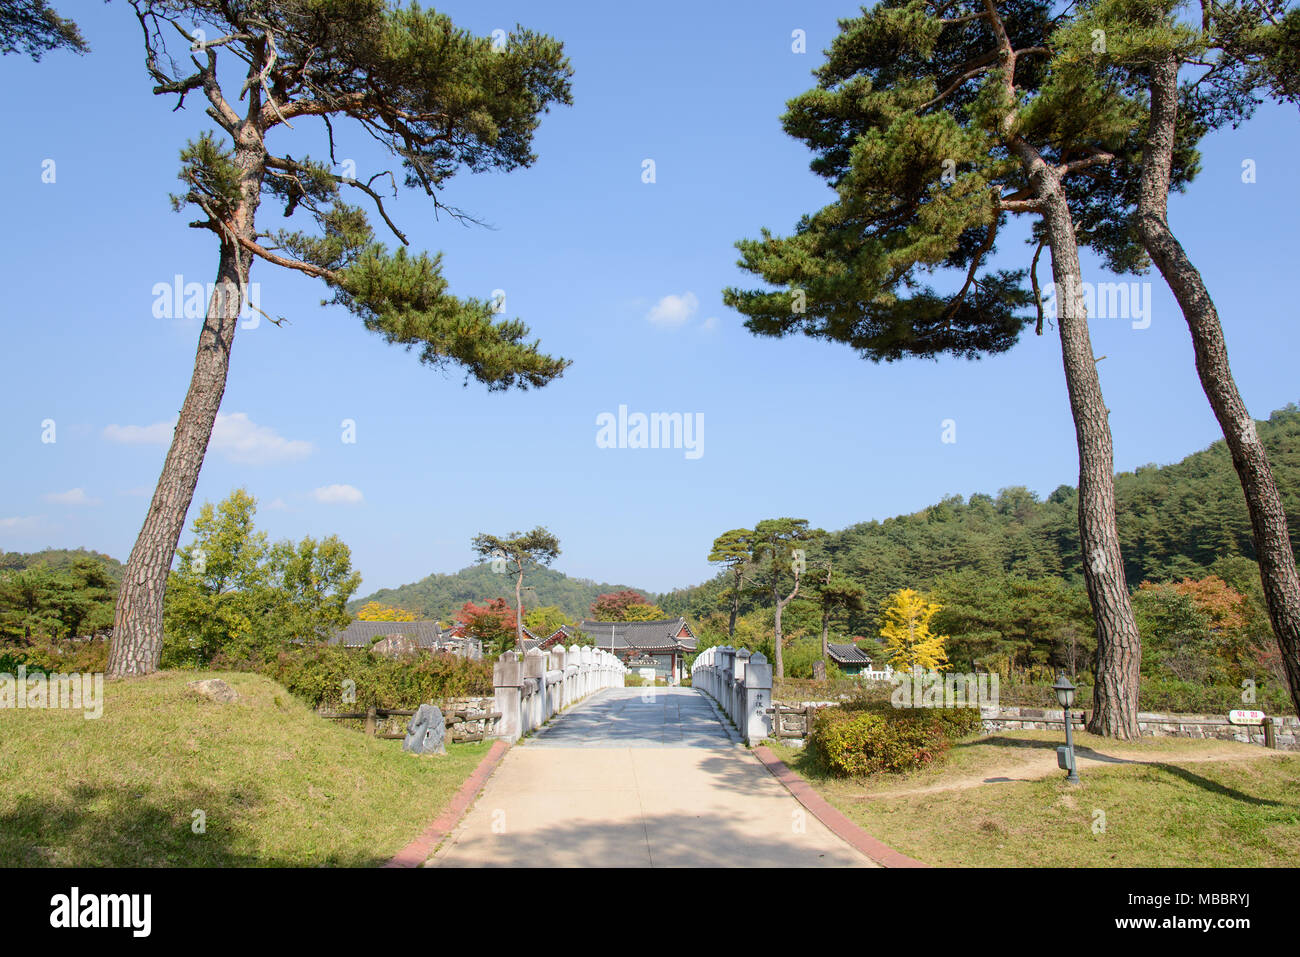 YEONGJU, KOREA - OCTOBER 15, 2014: Entrance view of Seonbichon traditional village. Stock Photo